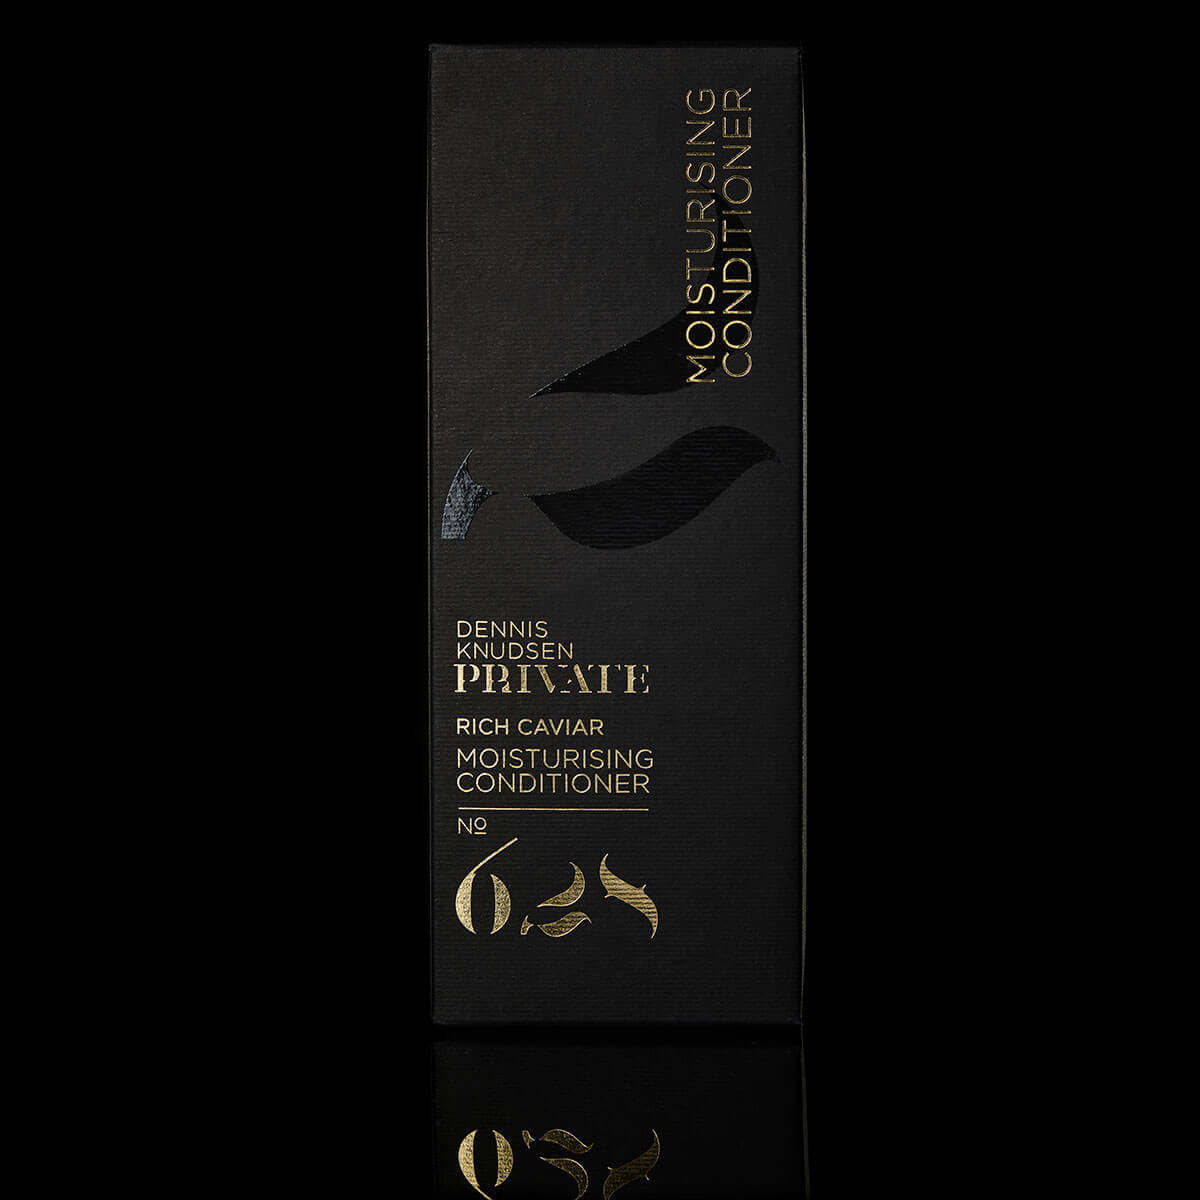 rich caviar moisturising conditioner 628 dennis knudsen private box